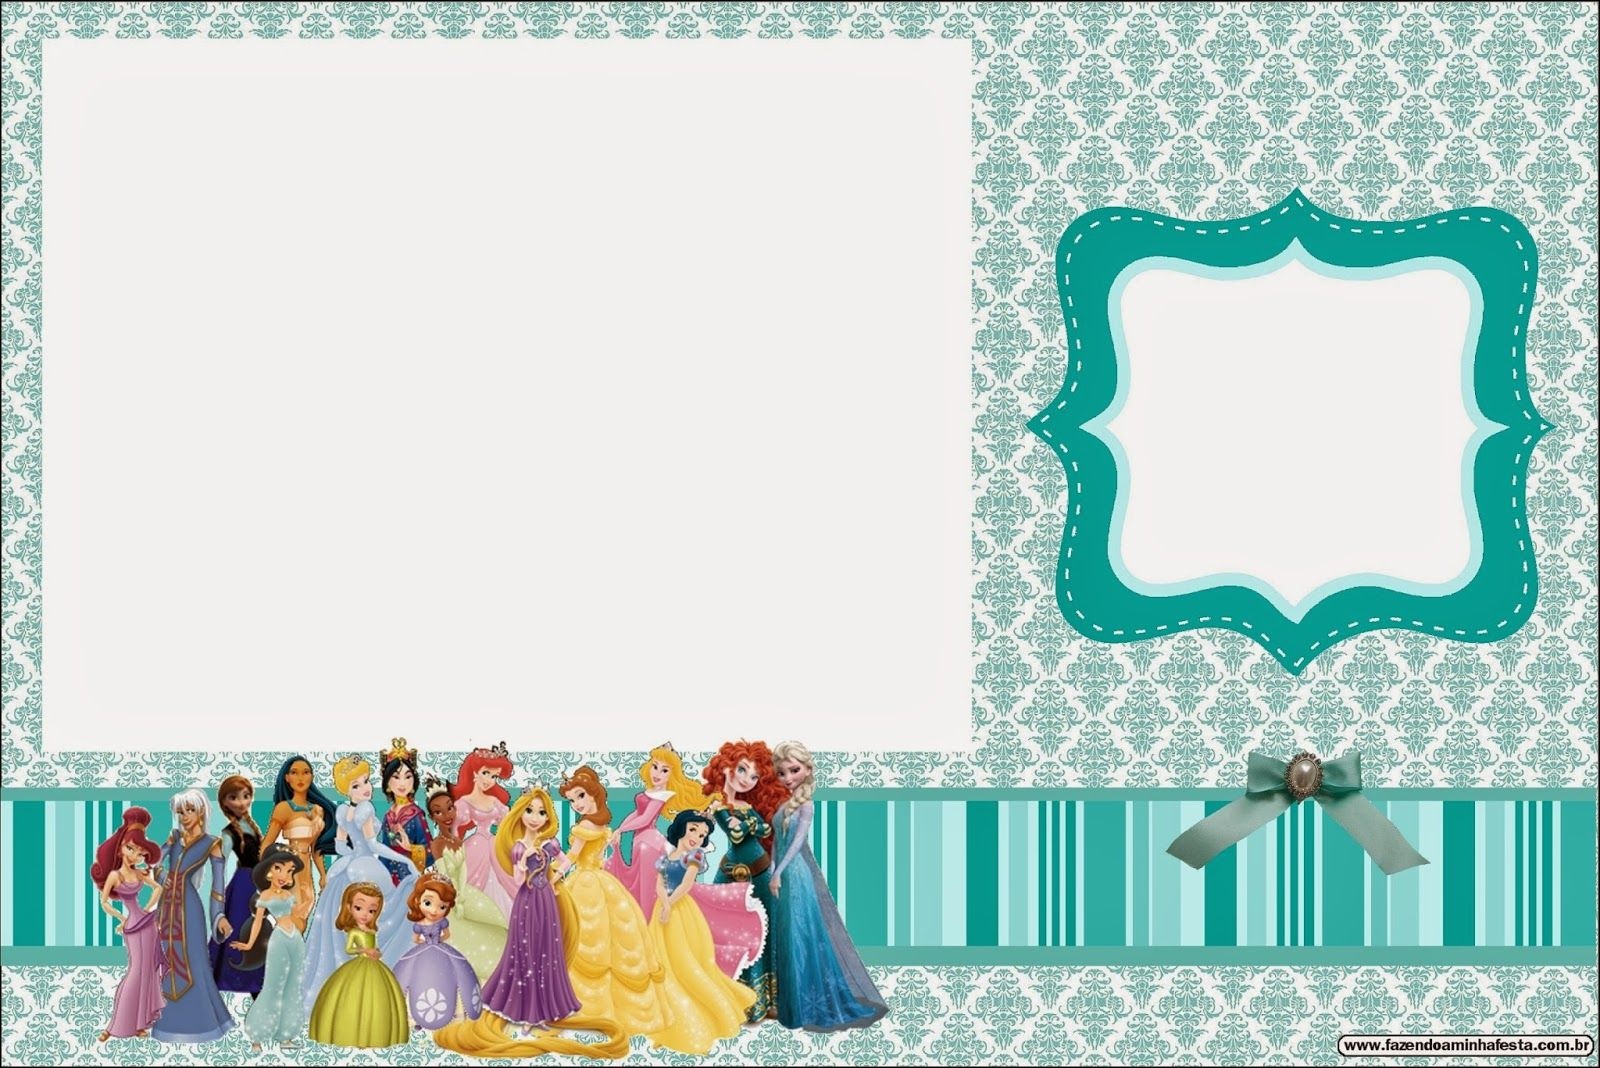 All Disney Princess: Free Printable Invitations. | Disney - Parties - Disney Princess Free Printable Invitations